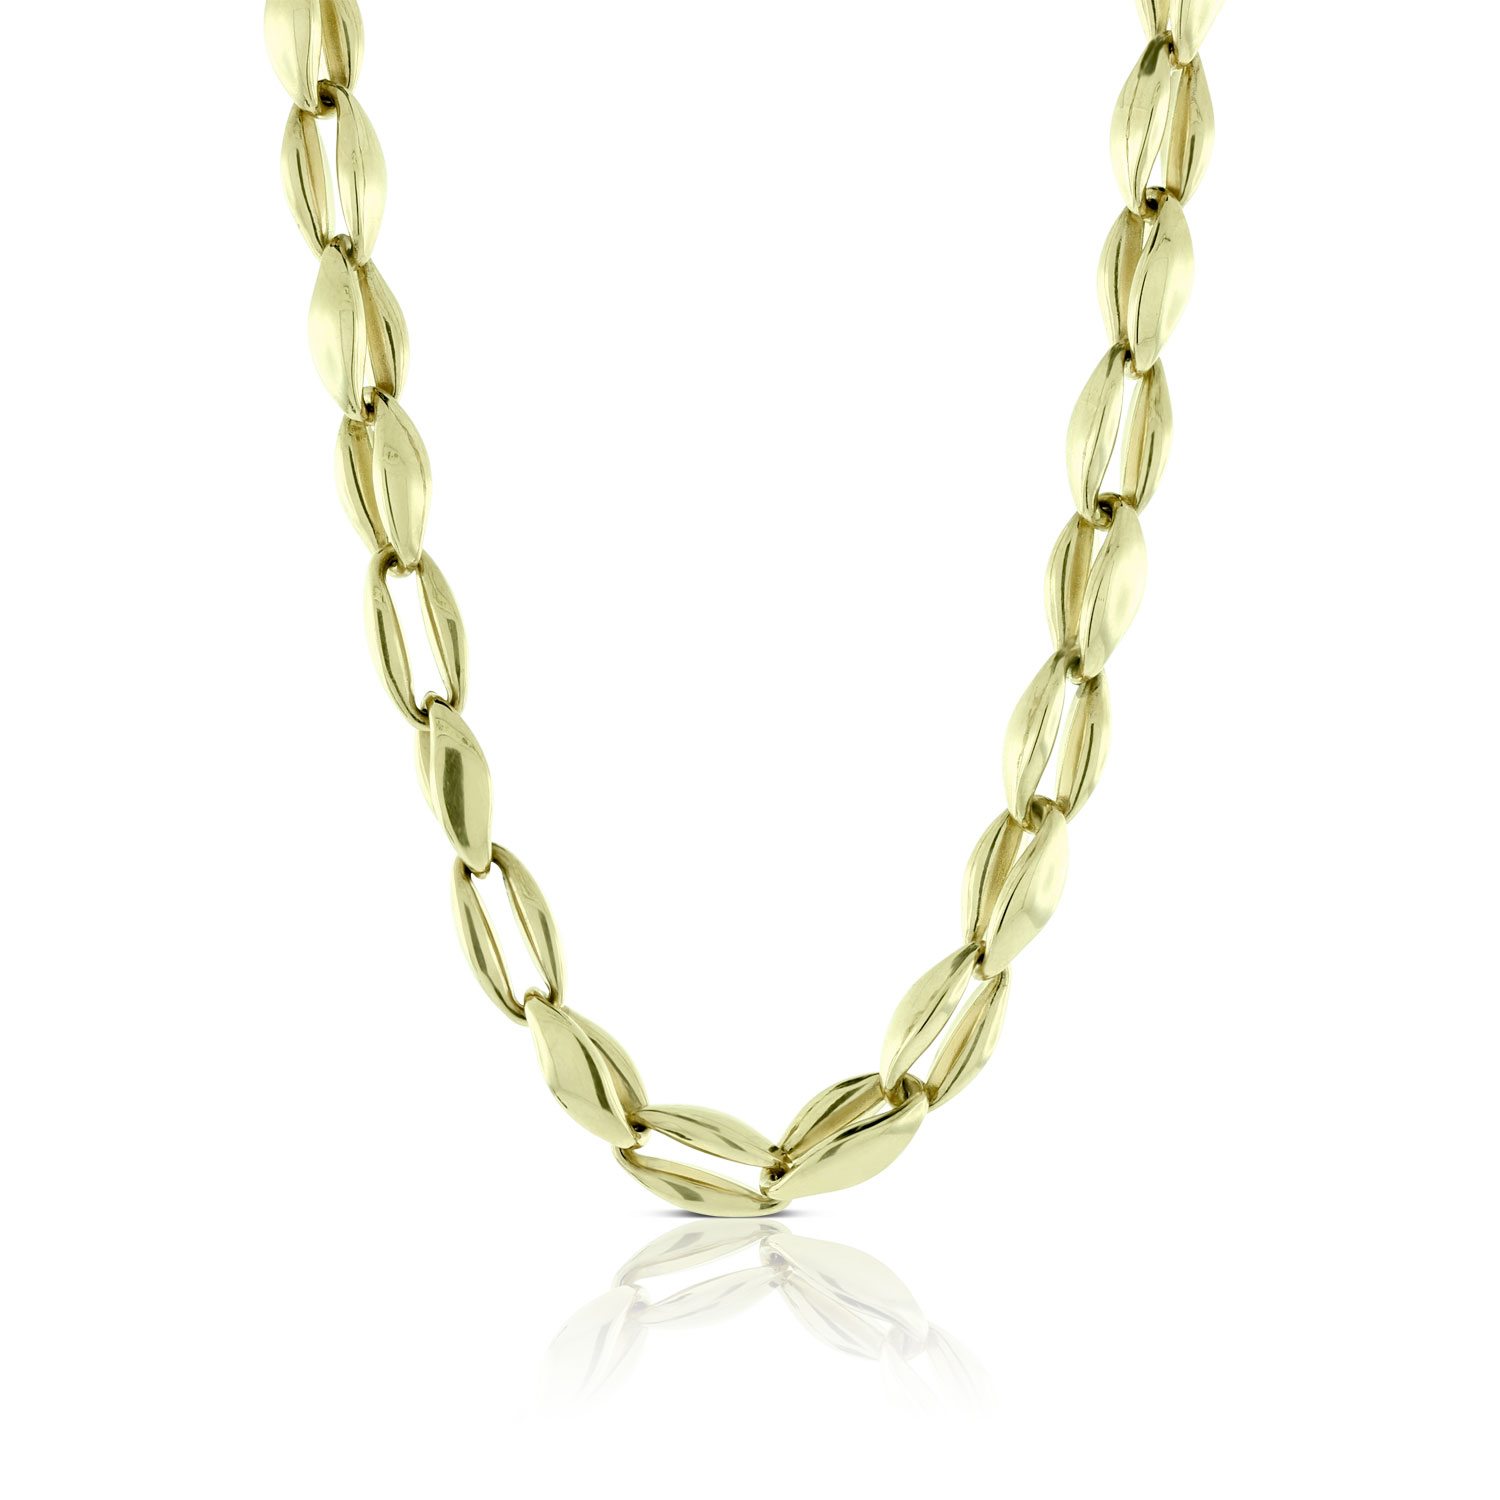 Toscano Stampato Chain Necklace 14K, 24